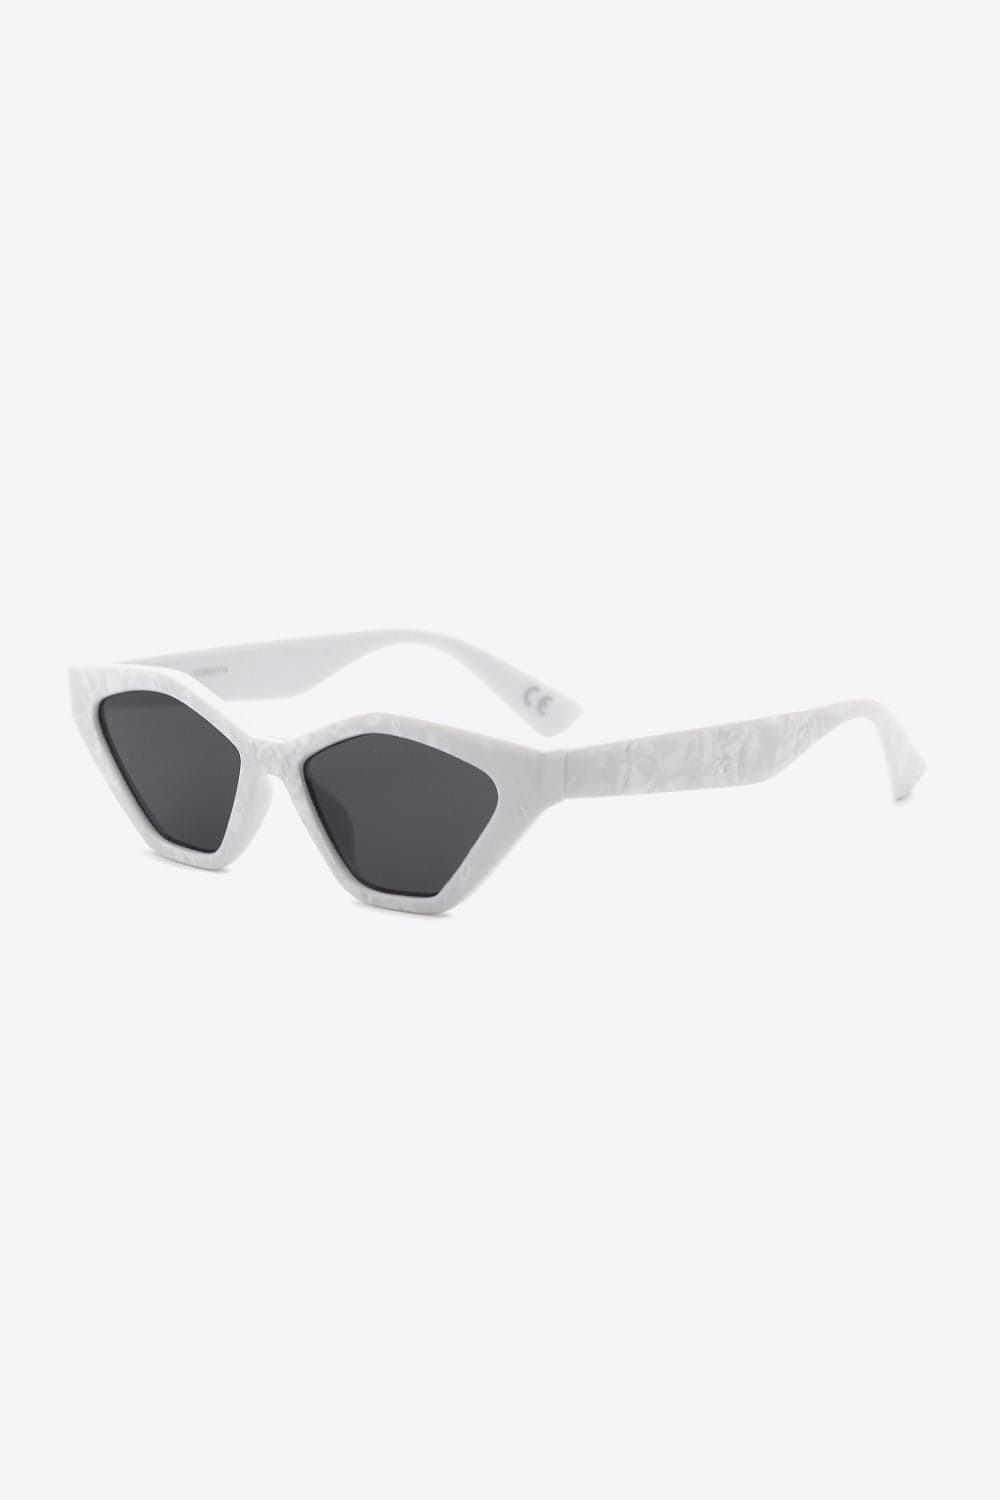 Trendsi sunglasses Light Gray / One Size Cat Eye Polycarbonate Sunglasses